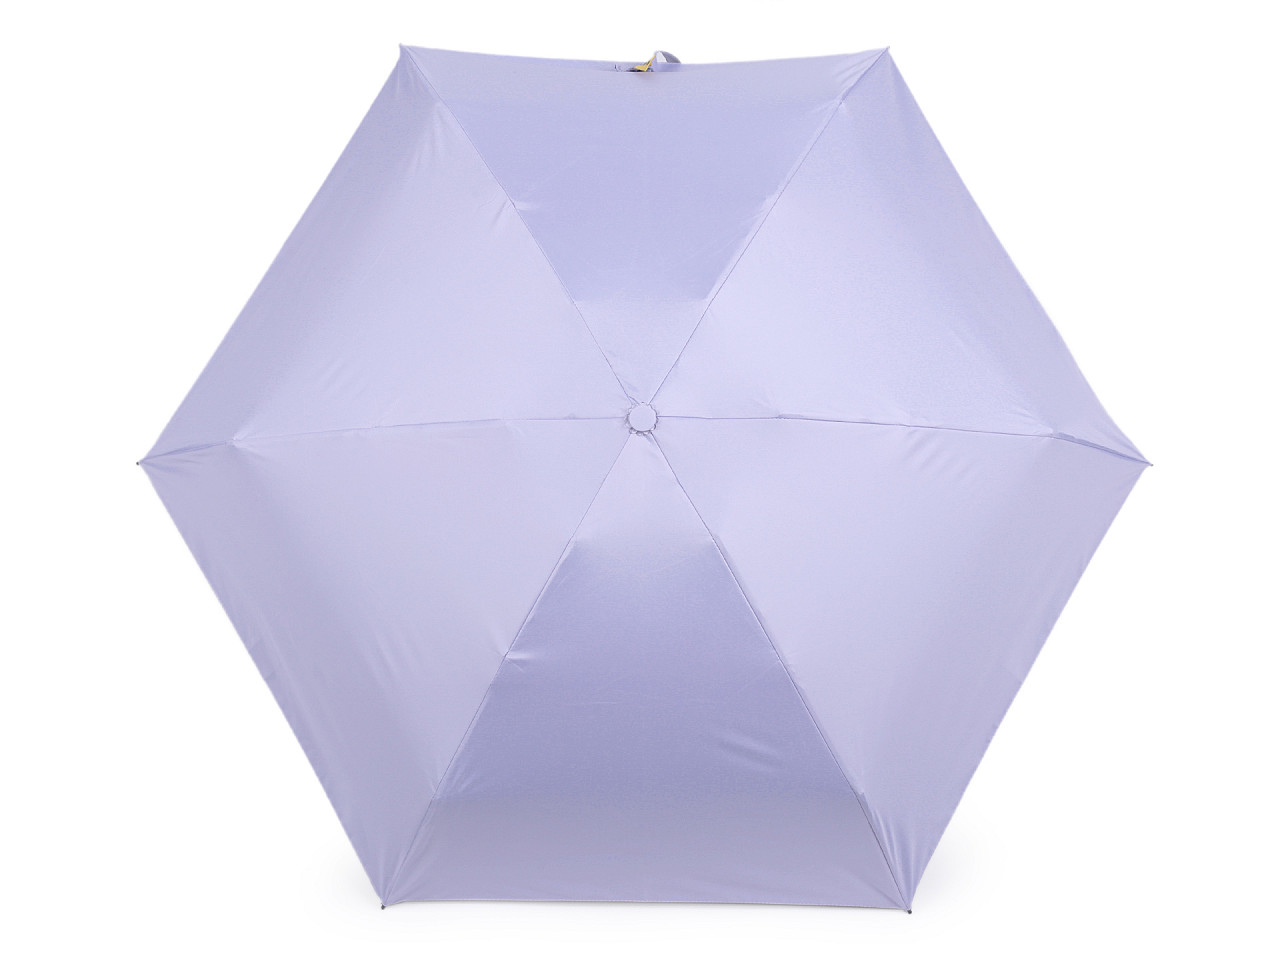 Faltbarer Mini-Regenschirm mit festem Etui, hellstes Violett, 1 Stück